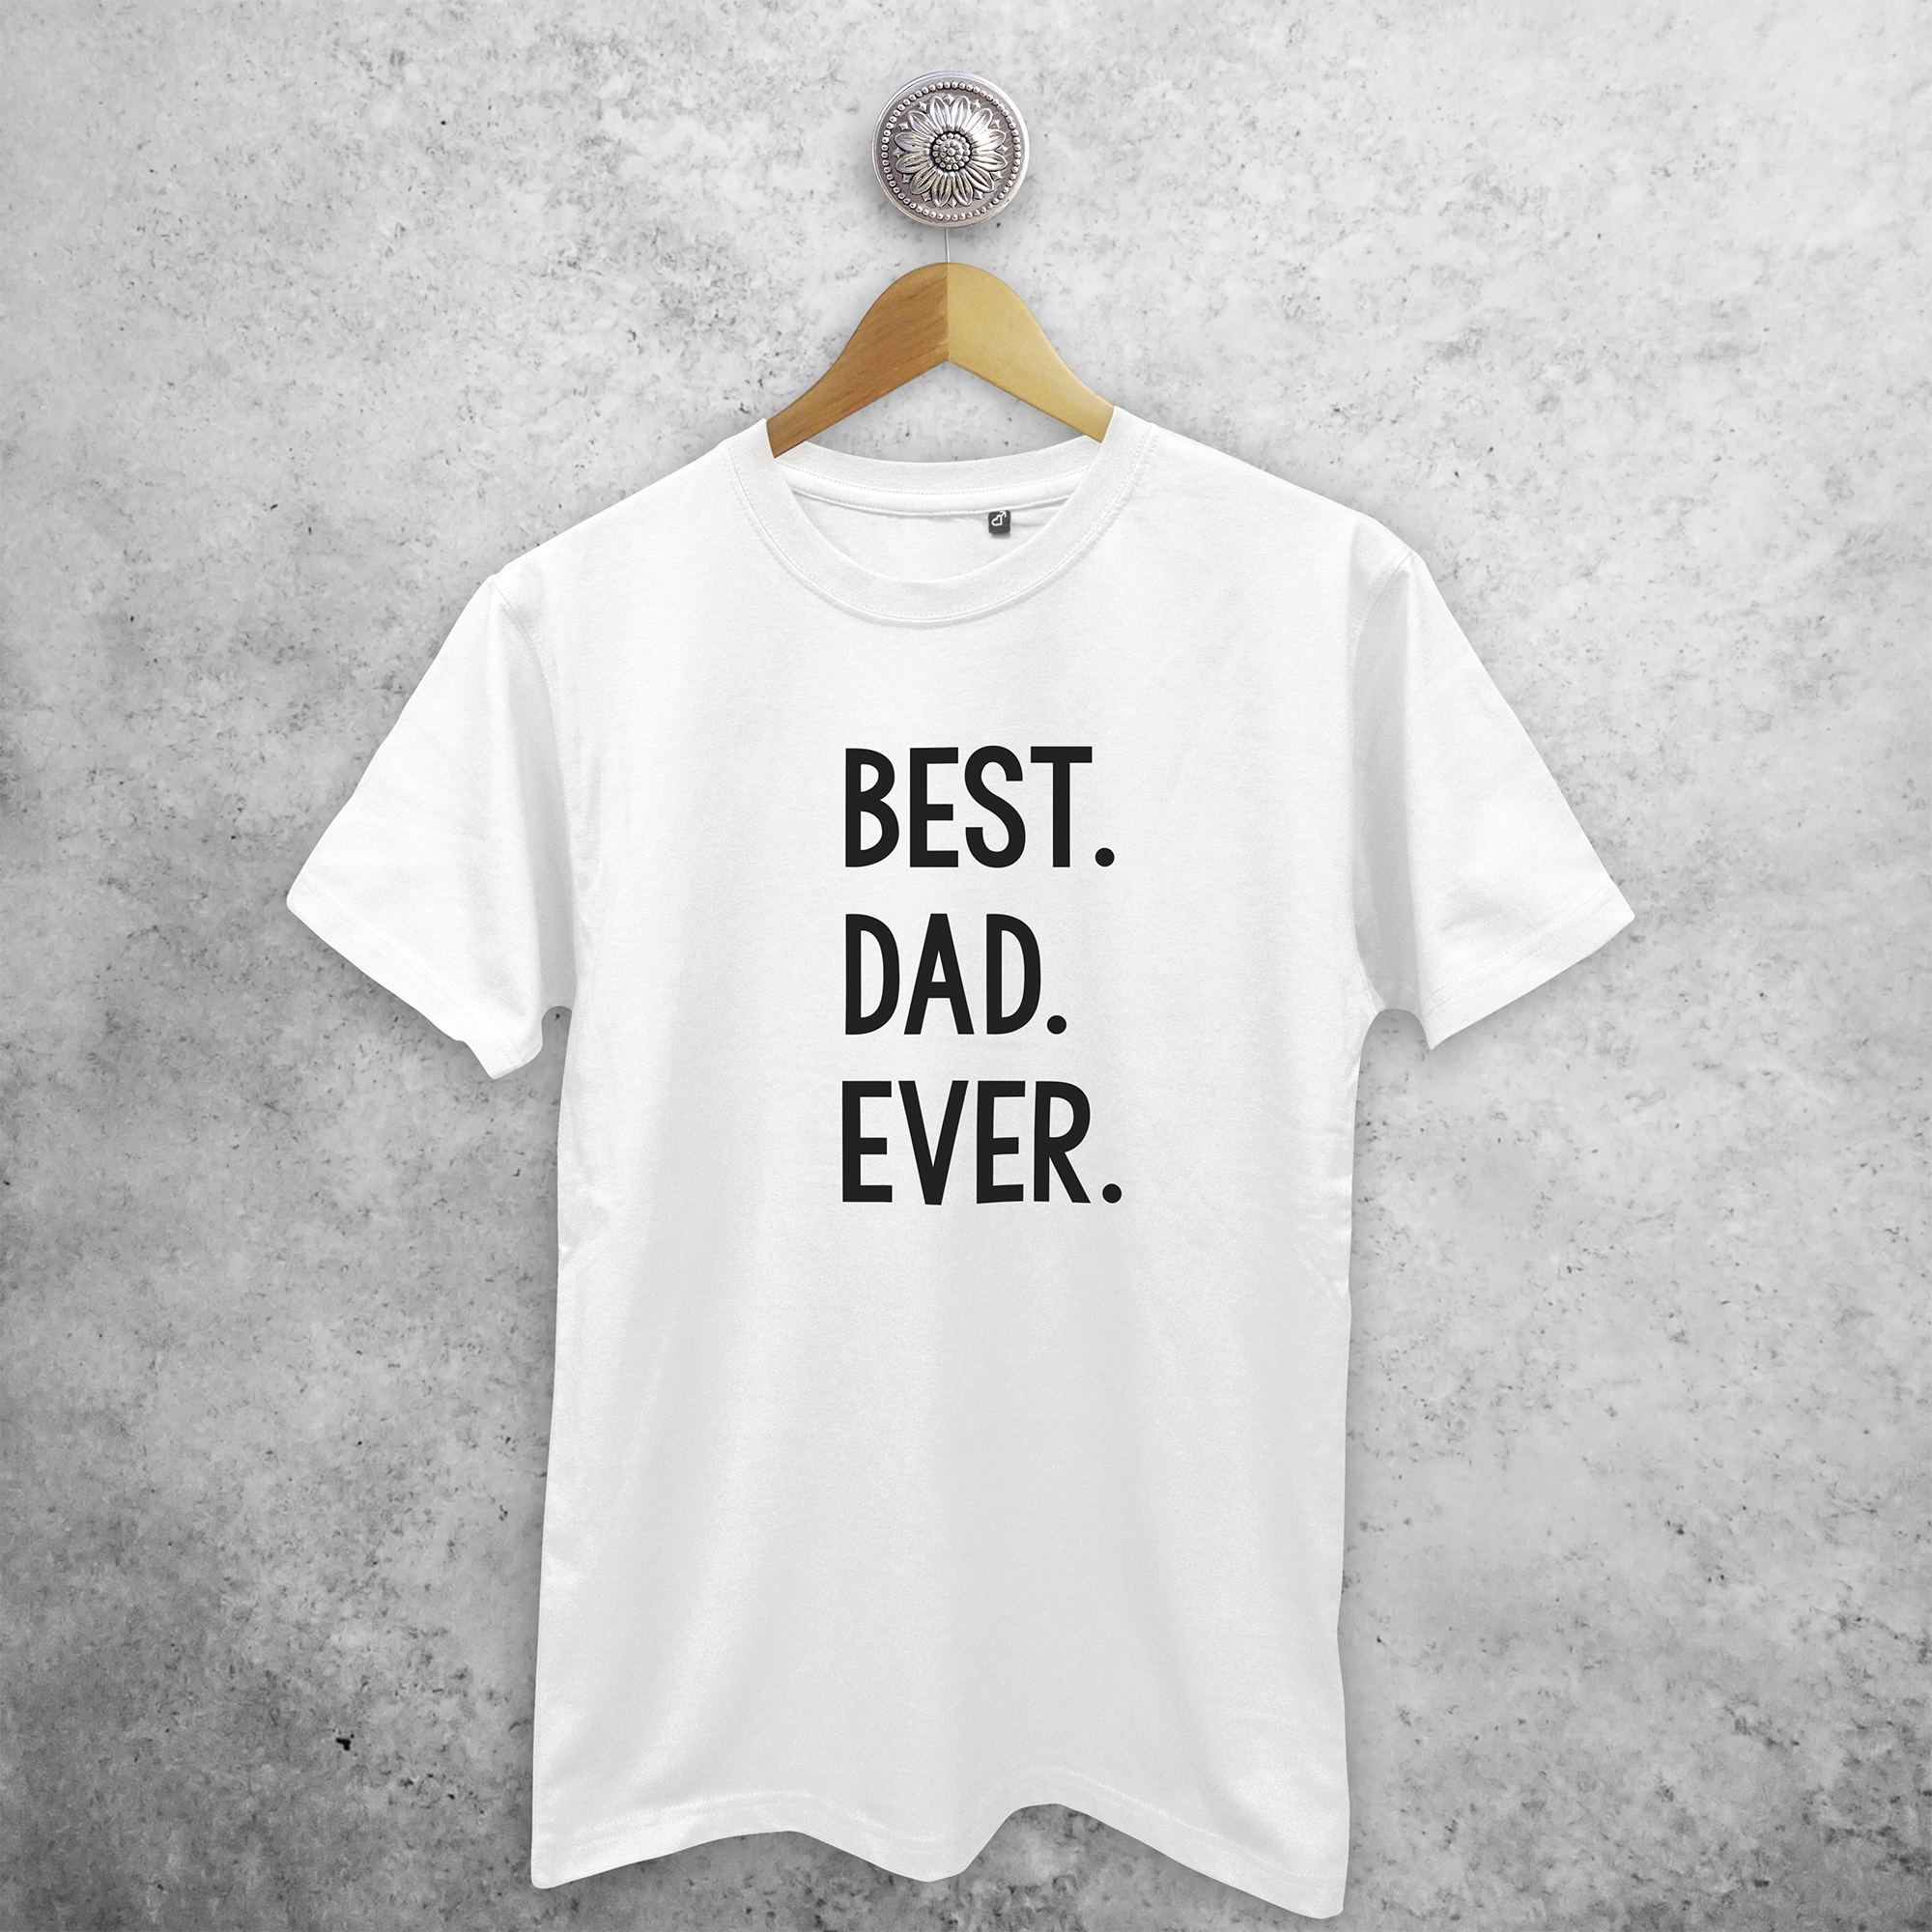 'Best. Dad. Ever.' adult shirt